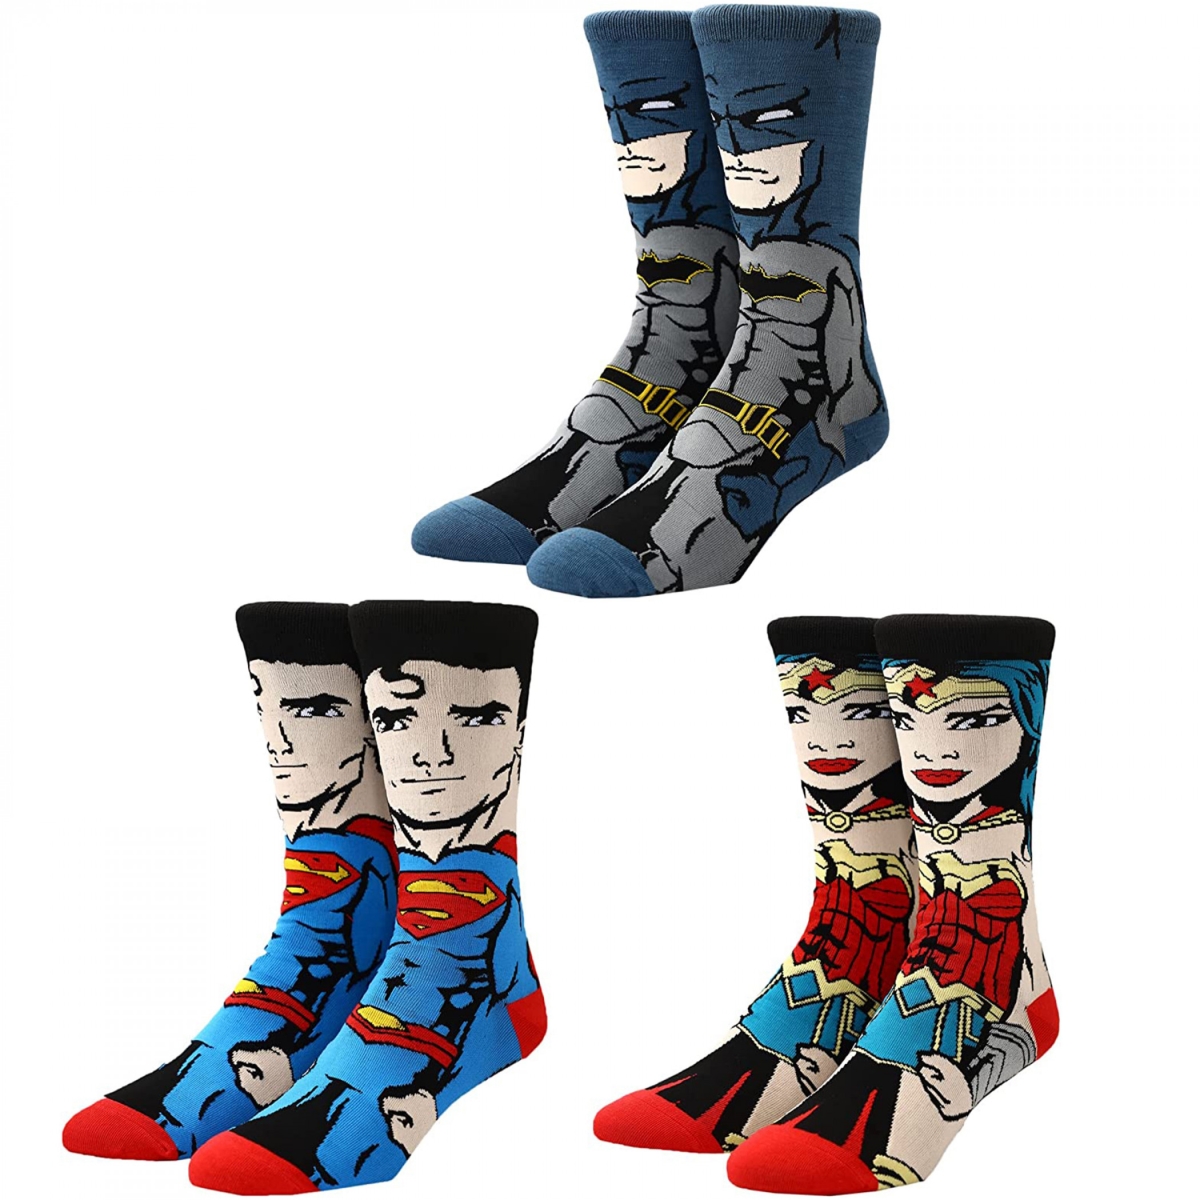 856561 DC Comics Justice League Crew Socks - 3 Pair -  DC Heroes & Justice League